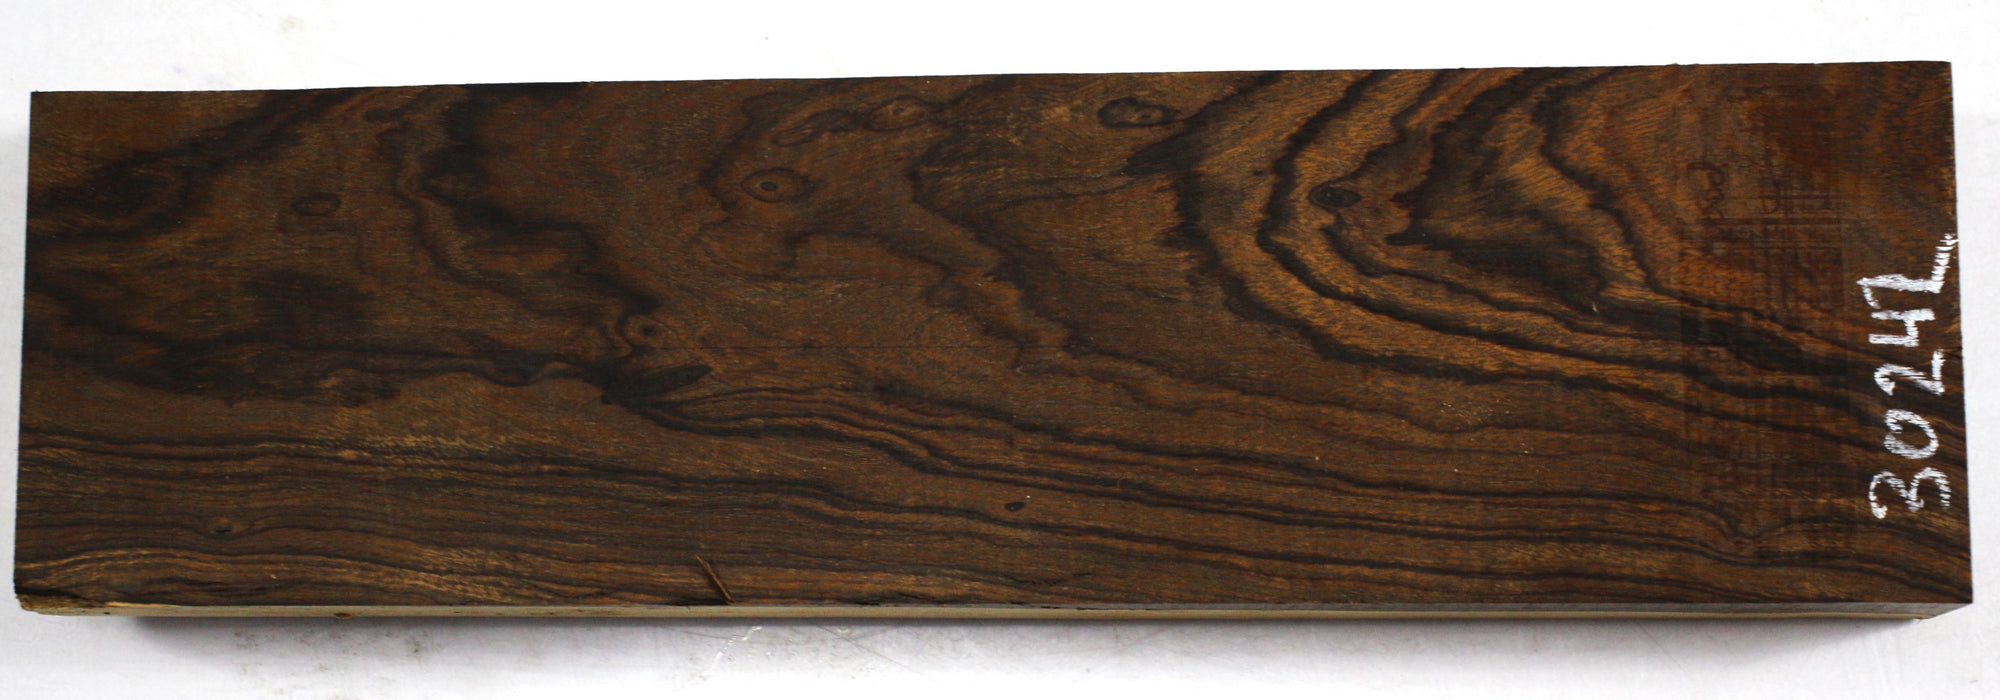 Desert Ironwood Piece , 3.25" x 12" x 1.13" - Stock# 3-0242